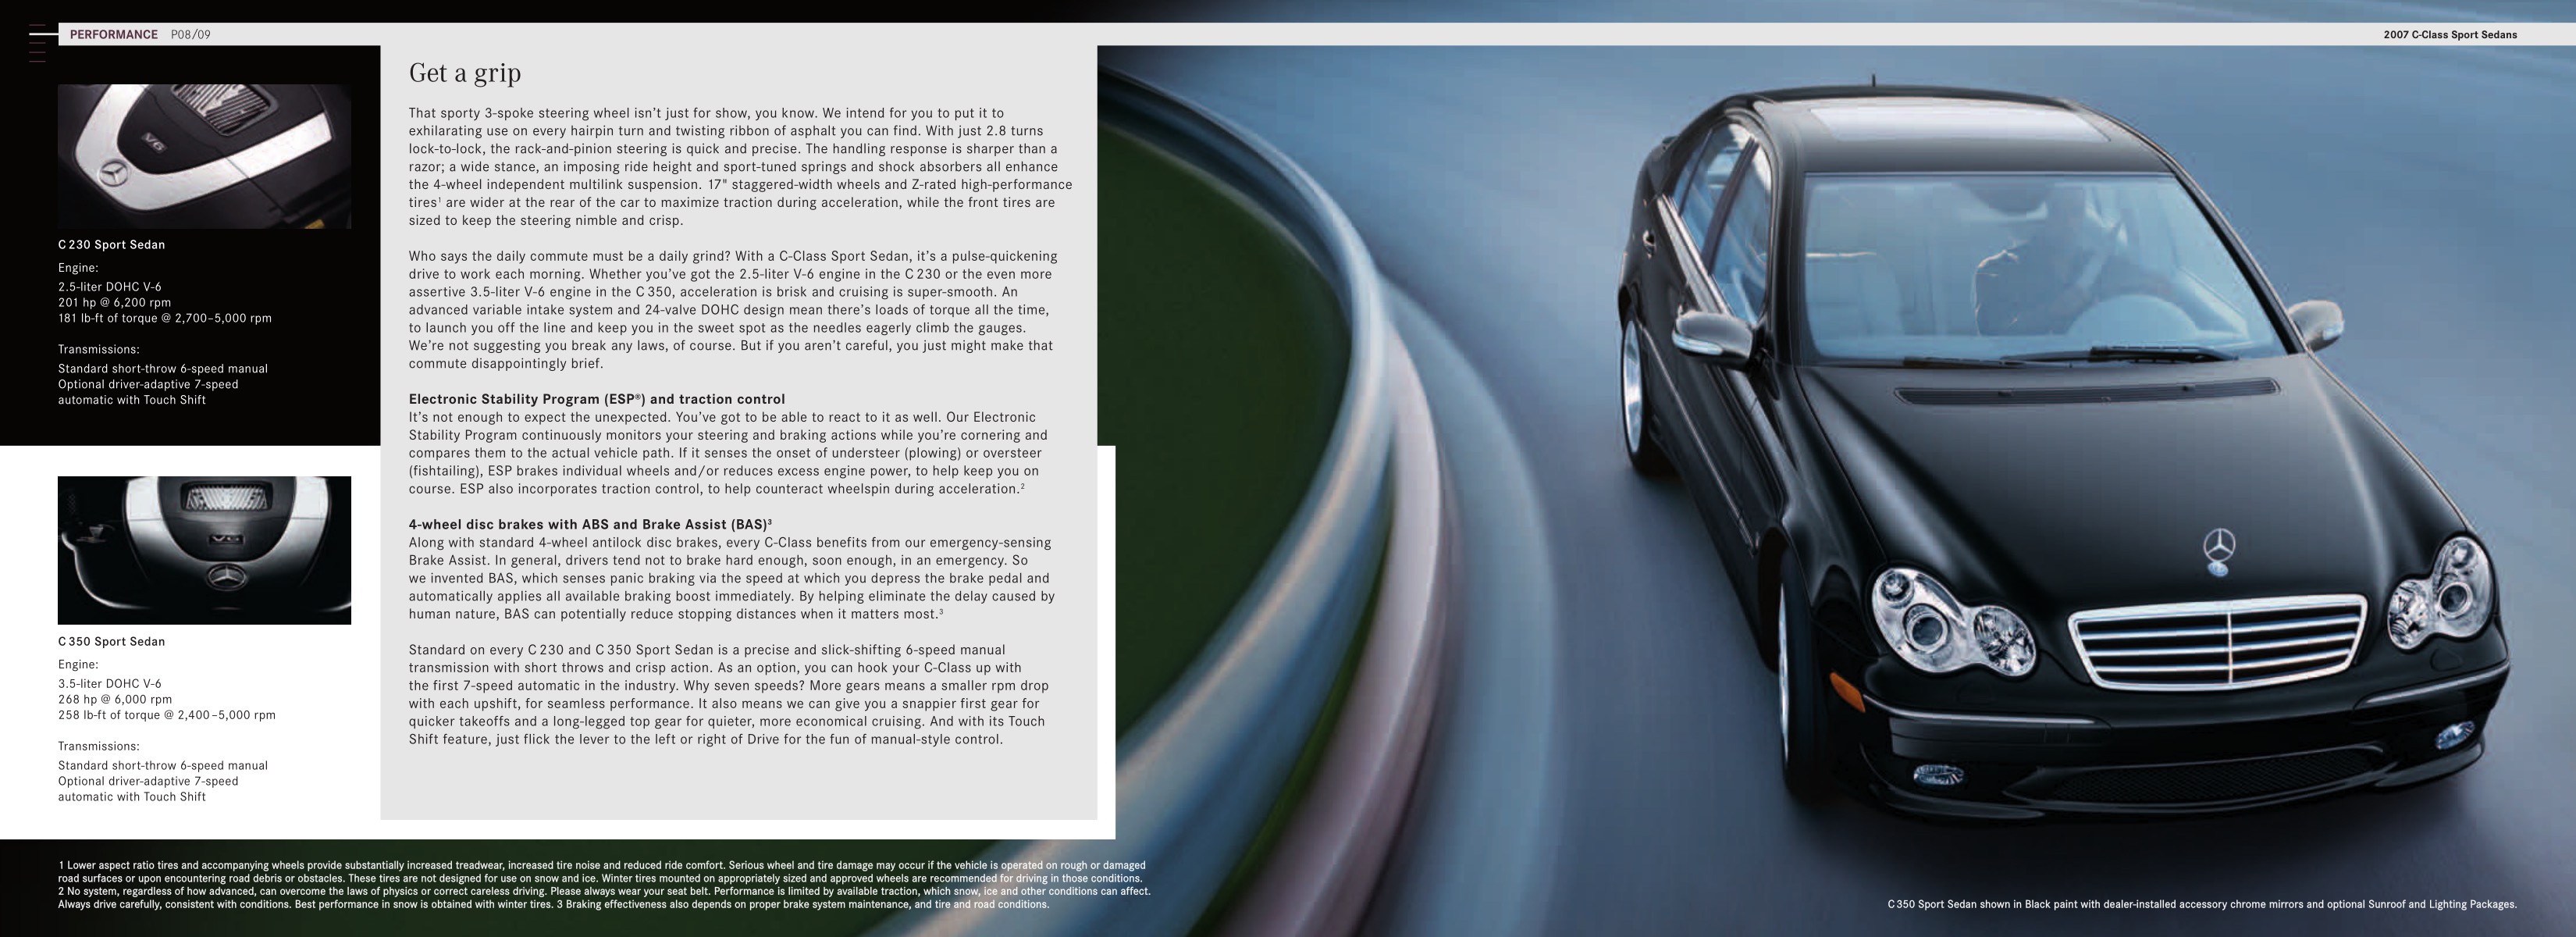 2007 Mercedes-Benz C-Class Sport Brochure Page 1